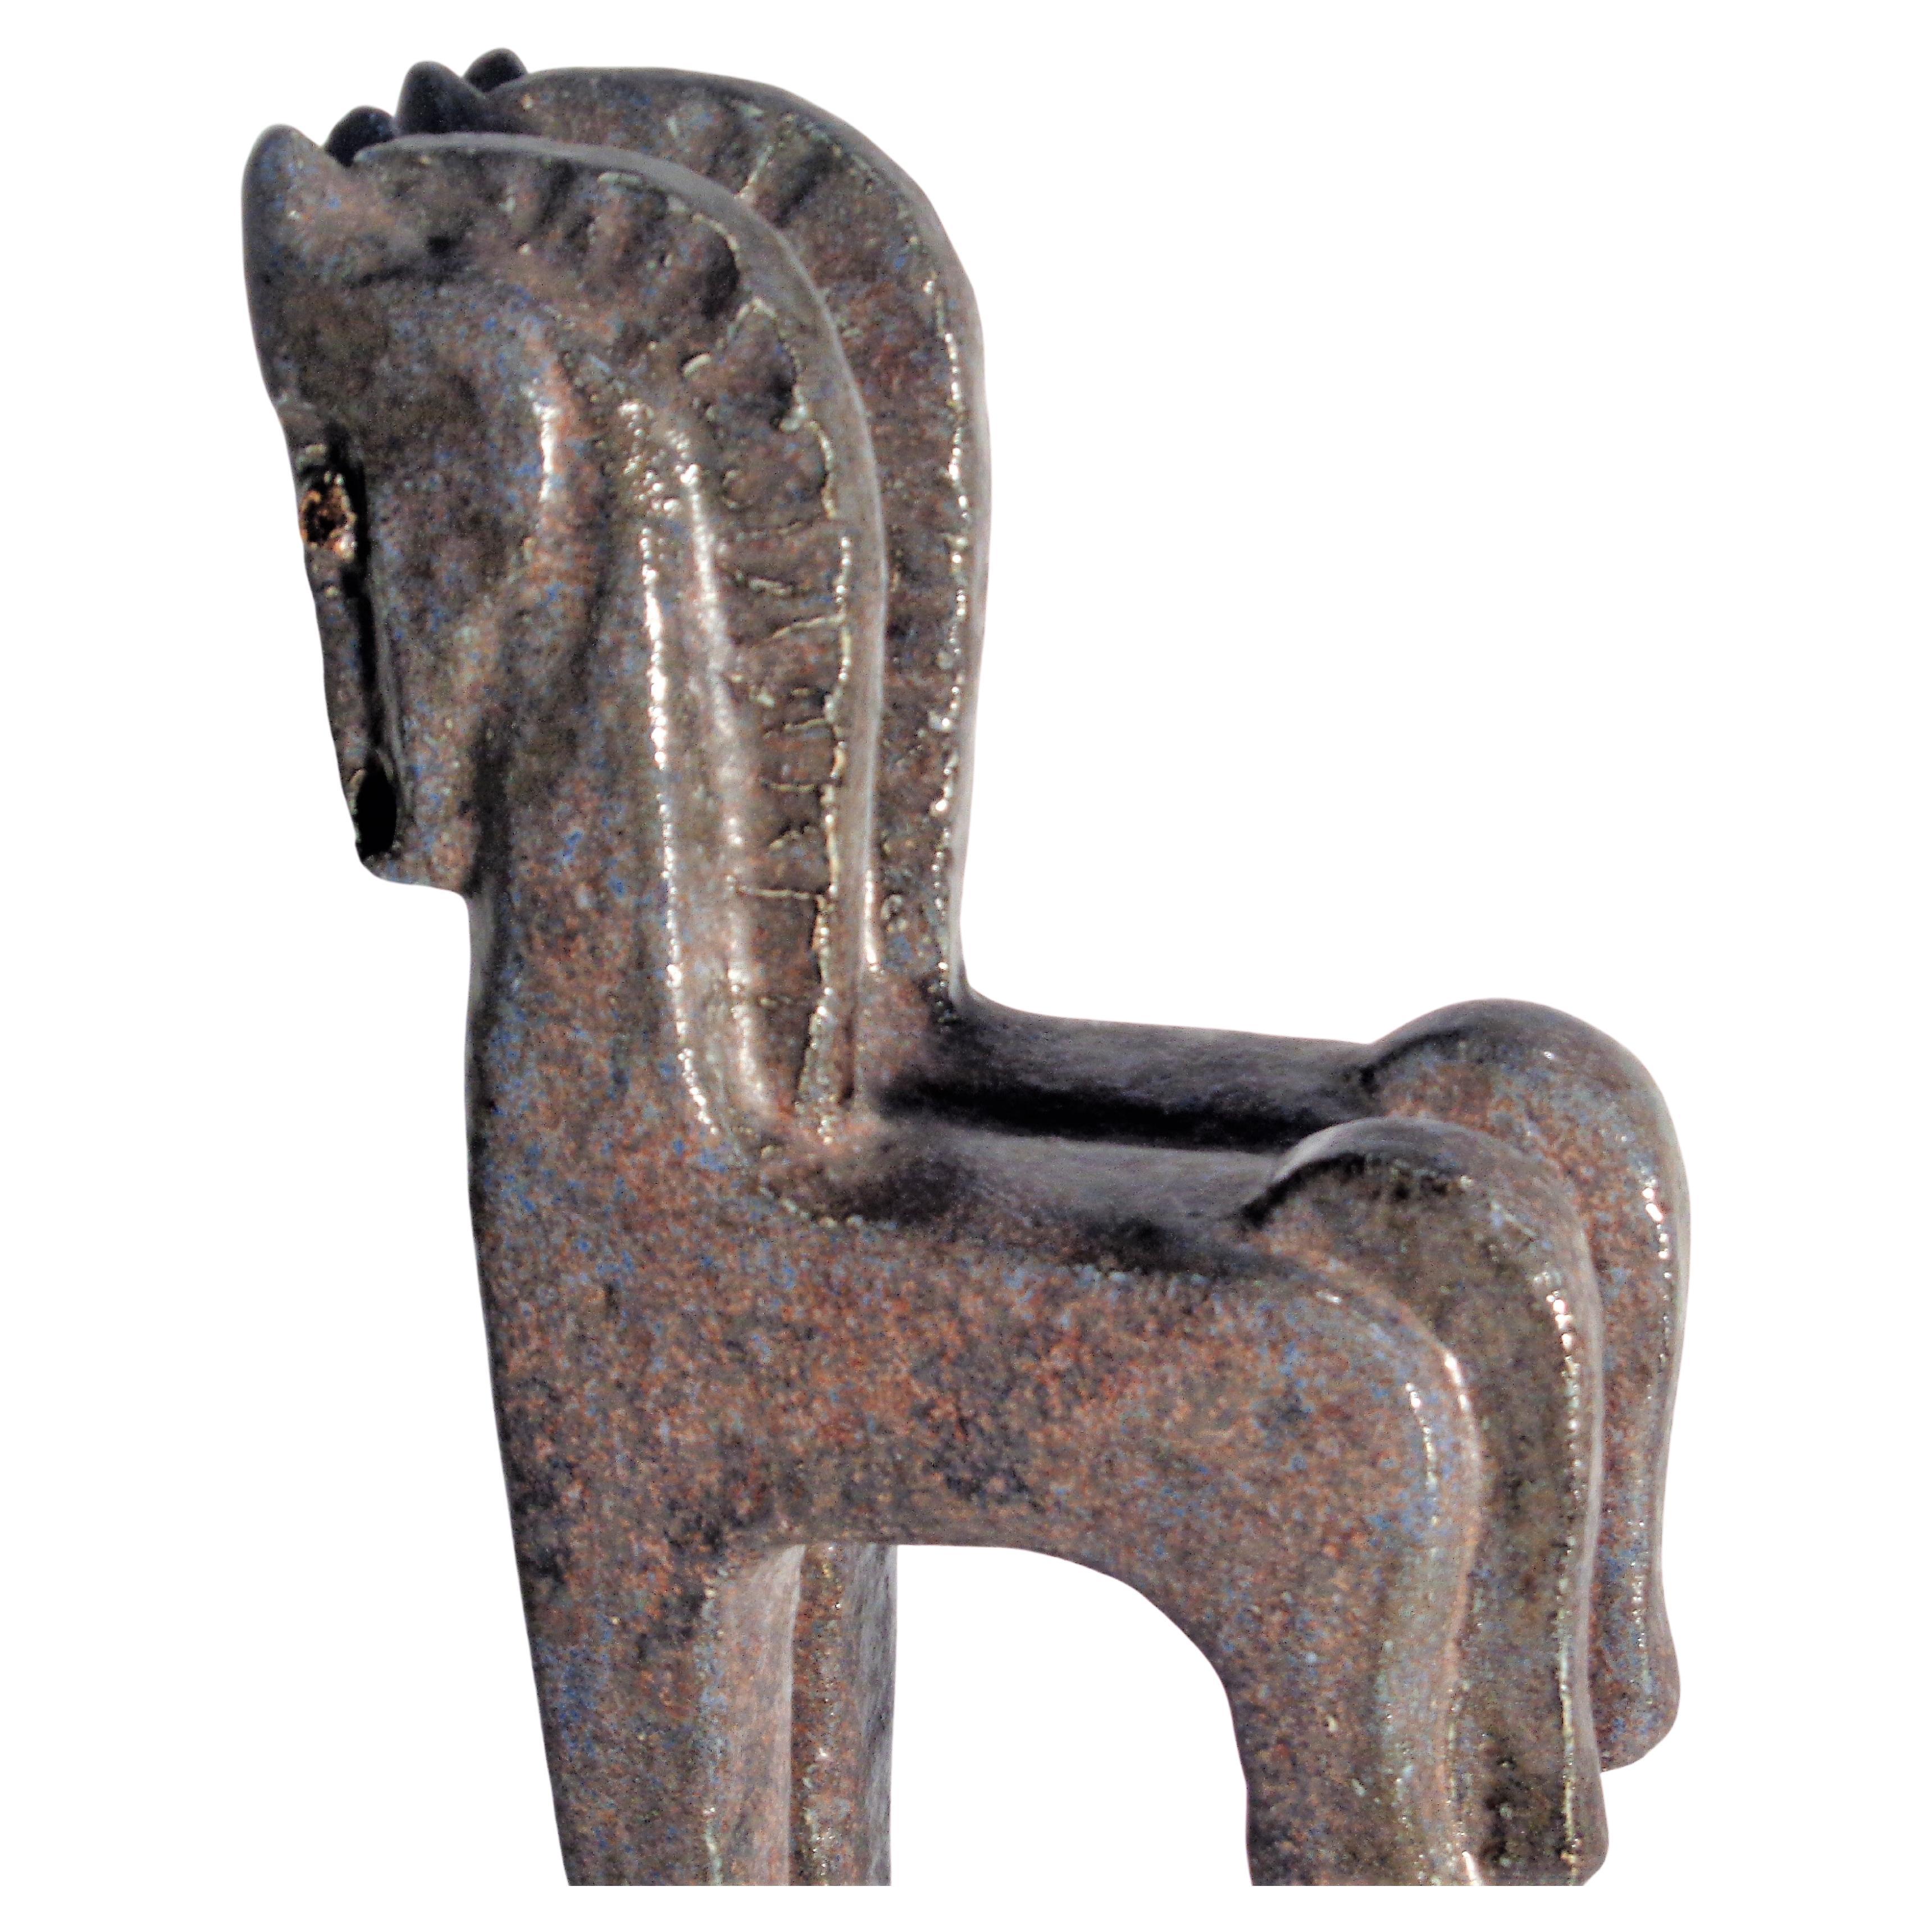 20th Century Standing Horses Cubist Style Ceramic Sculpture, Helmut Schaffenacker